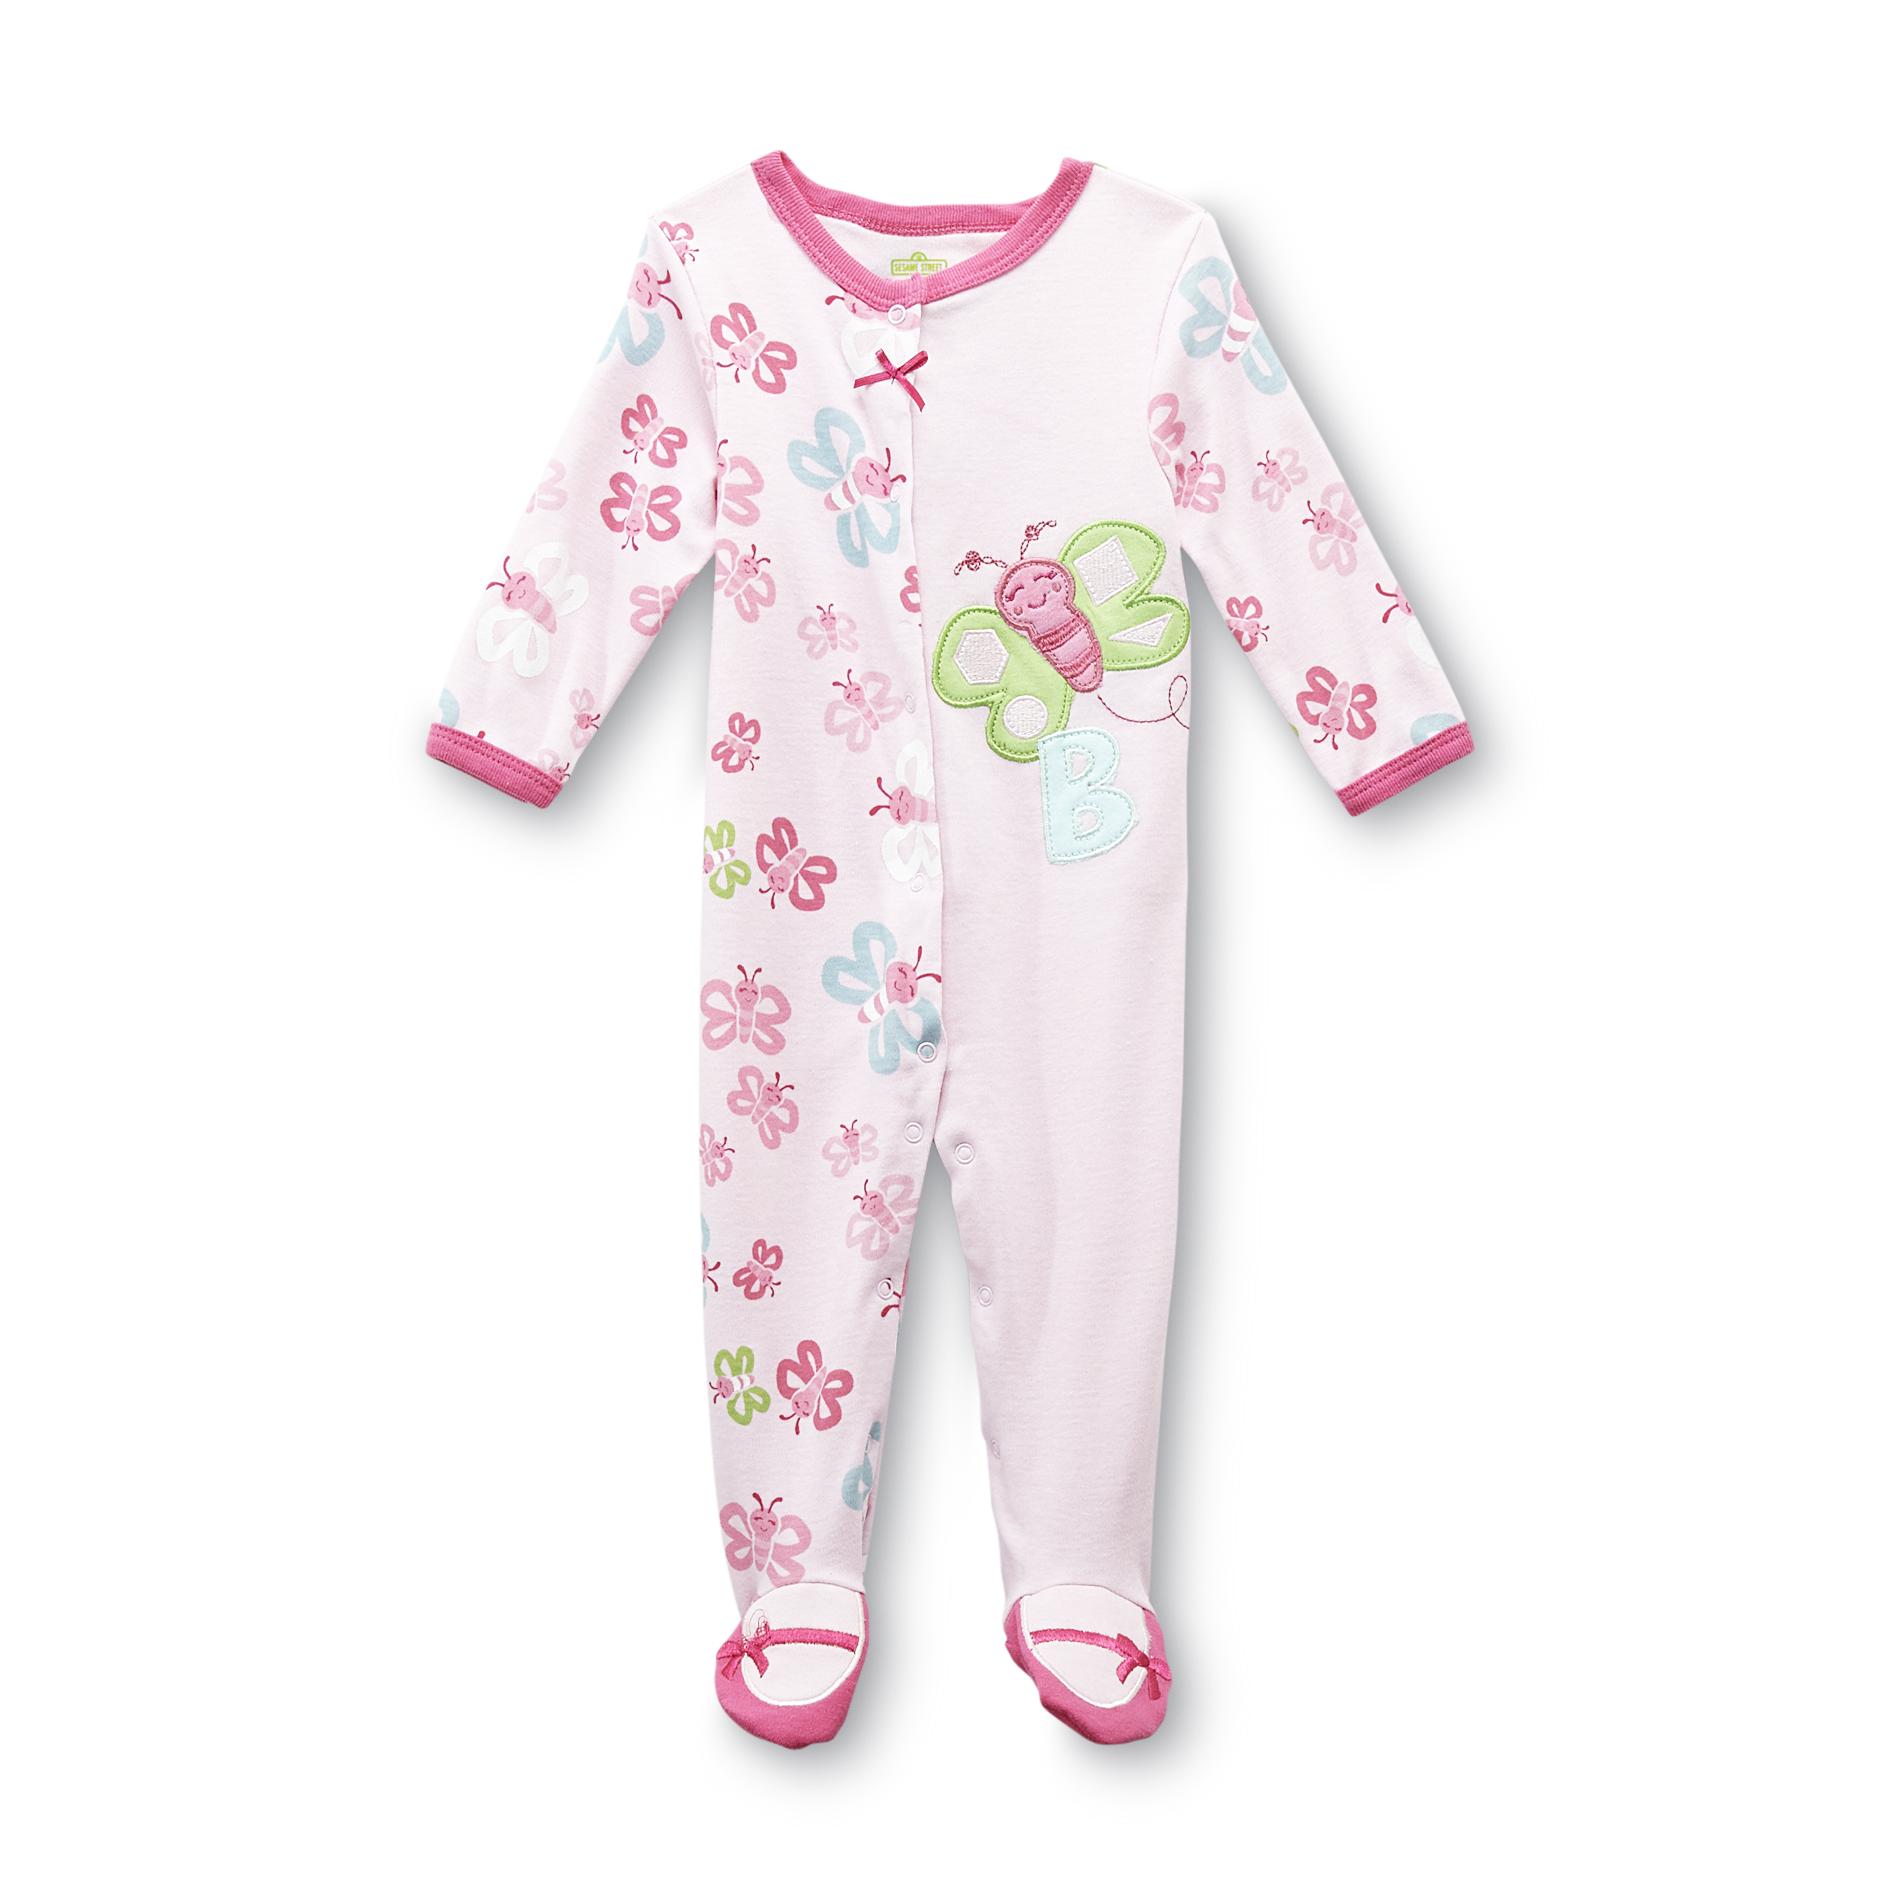 Sesame Street Newborn Girl's Footed Sleeper Pajamas - Butterfly